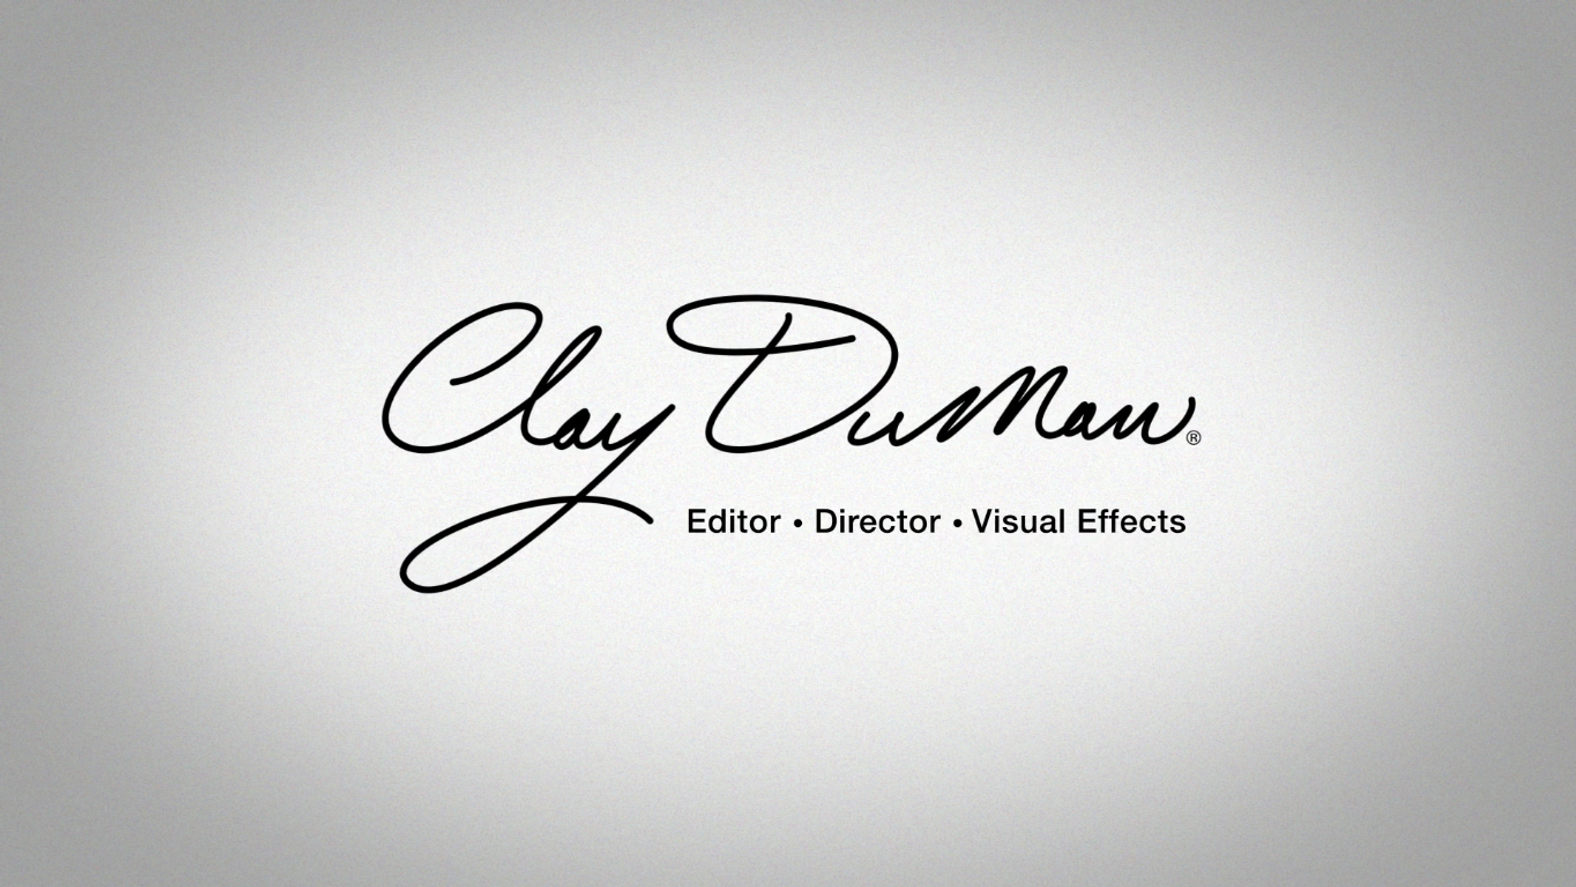 Clay Dumaw - Work